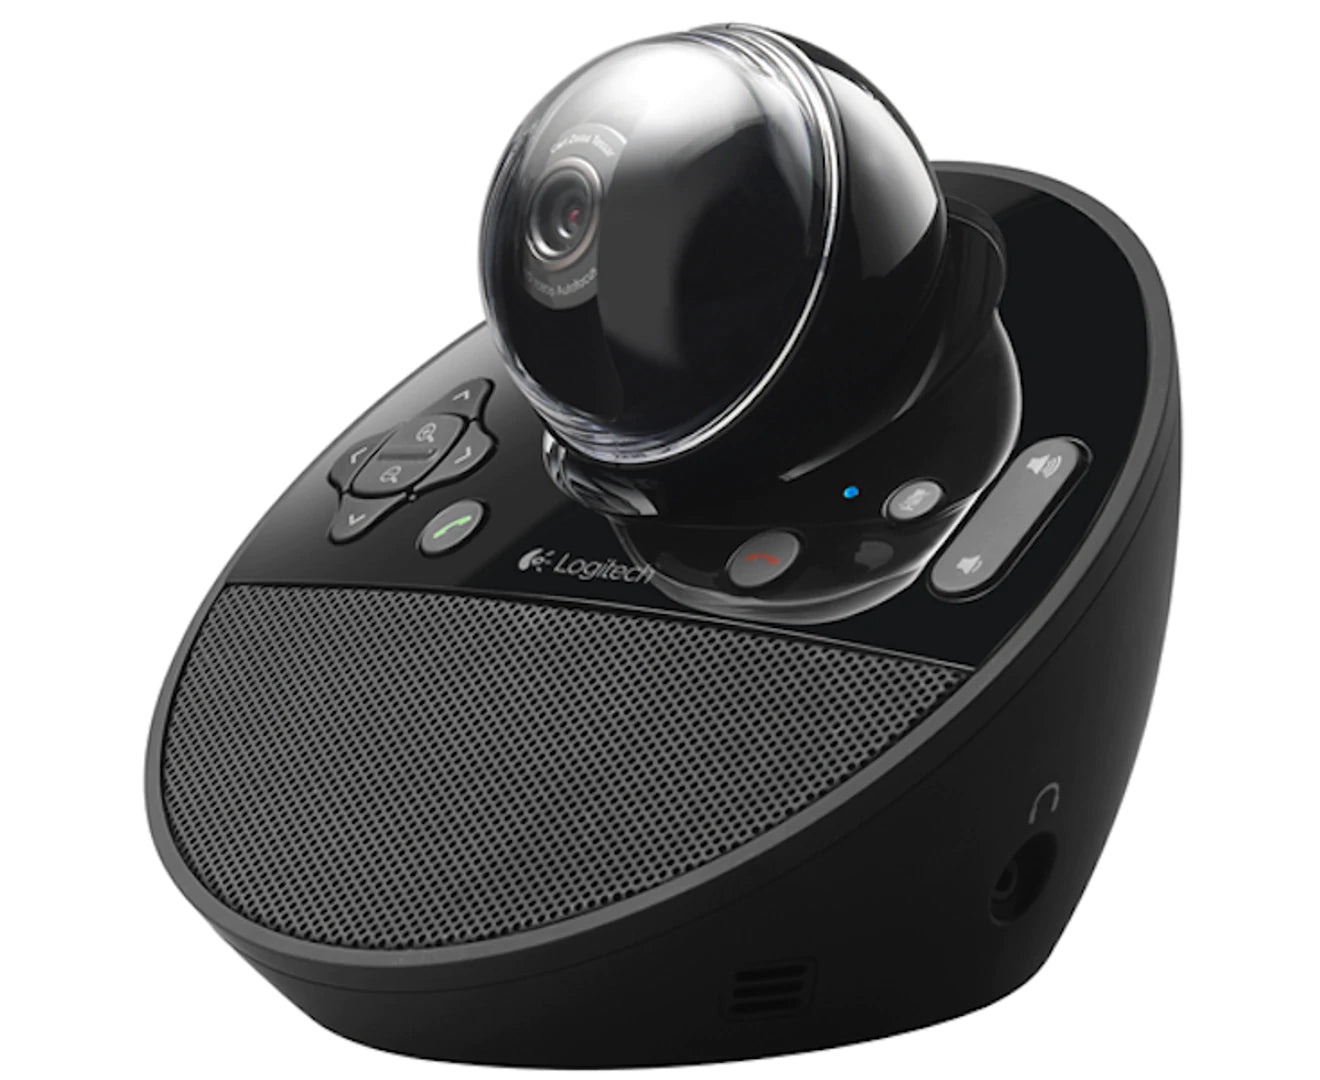 Logitech BCC950 Desktop Video Conferencing Solution, Full HD 1080p Video Calling, Hi-Definition Webcam, Speakerphone with Noise-Reducing Mic, for Skype, WebEx, Zoom PC/Mac/Laptop/MacBook - Black